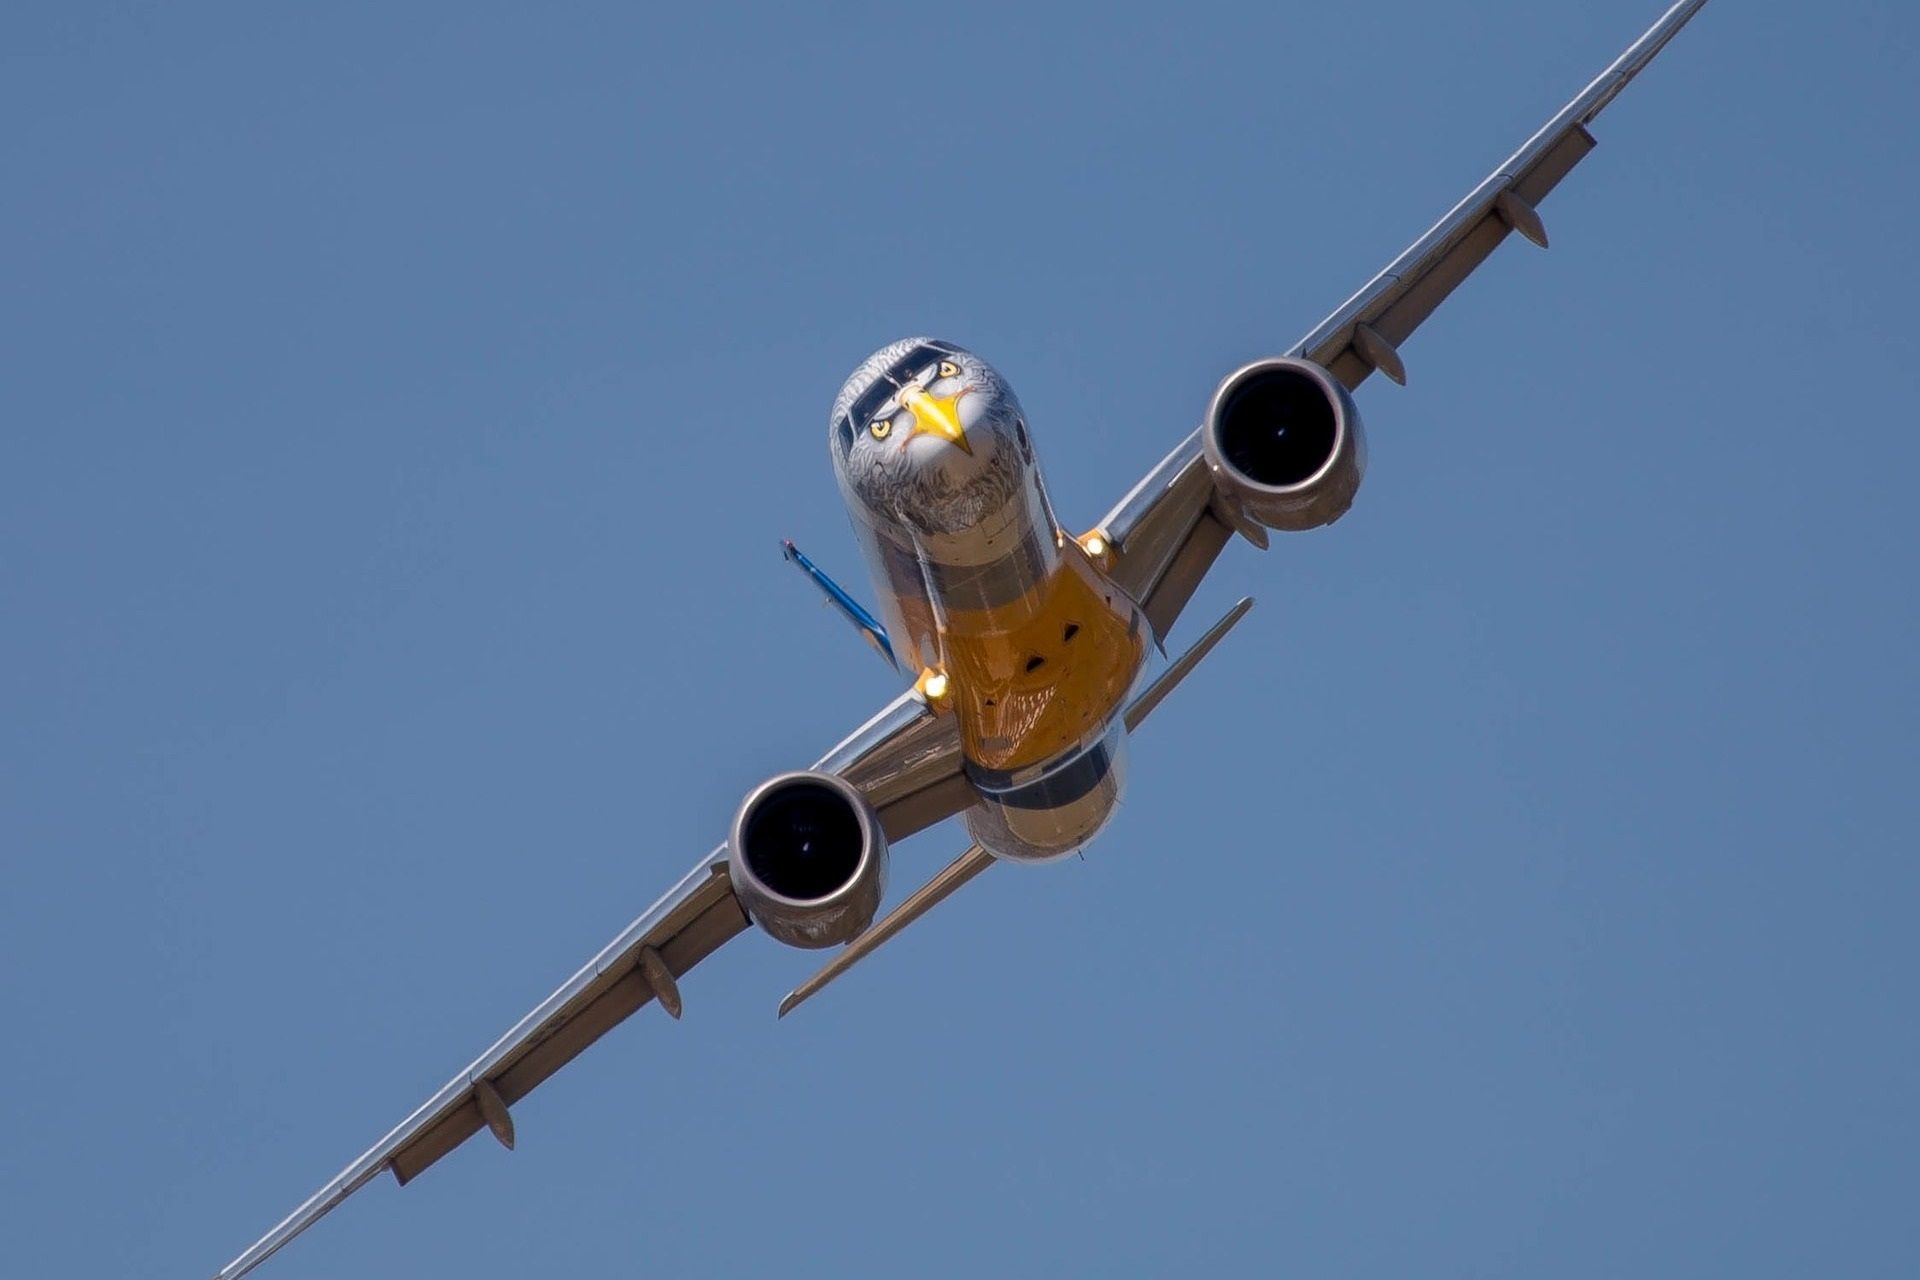 Embraer E195-E2 flying 3.2